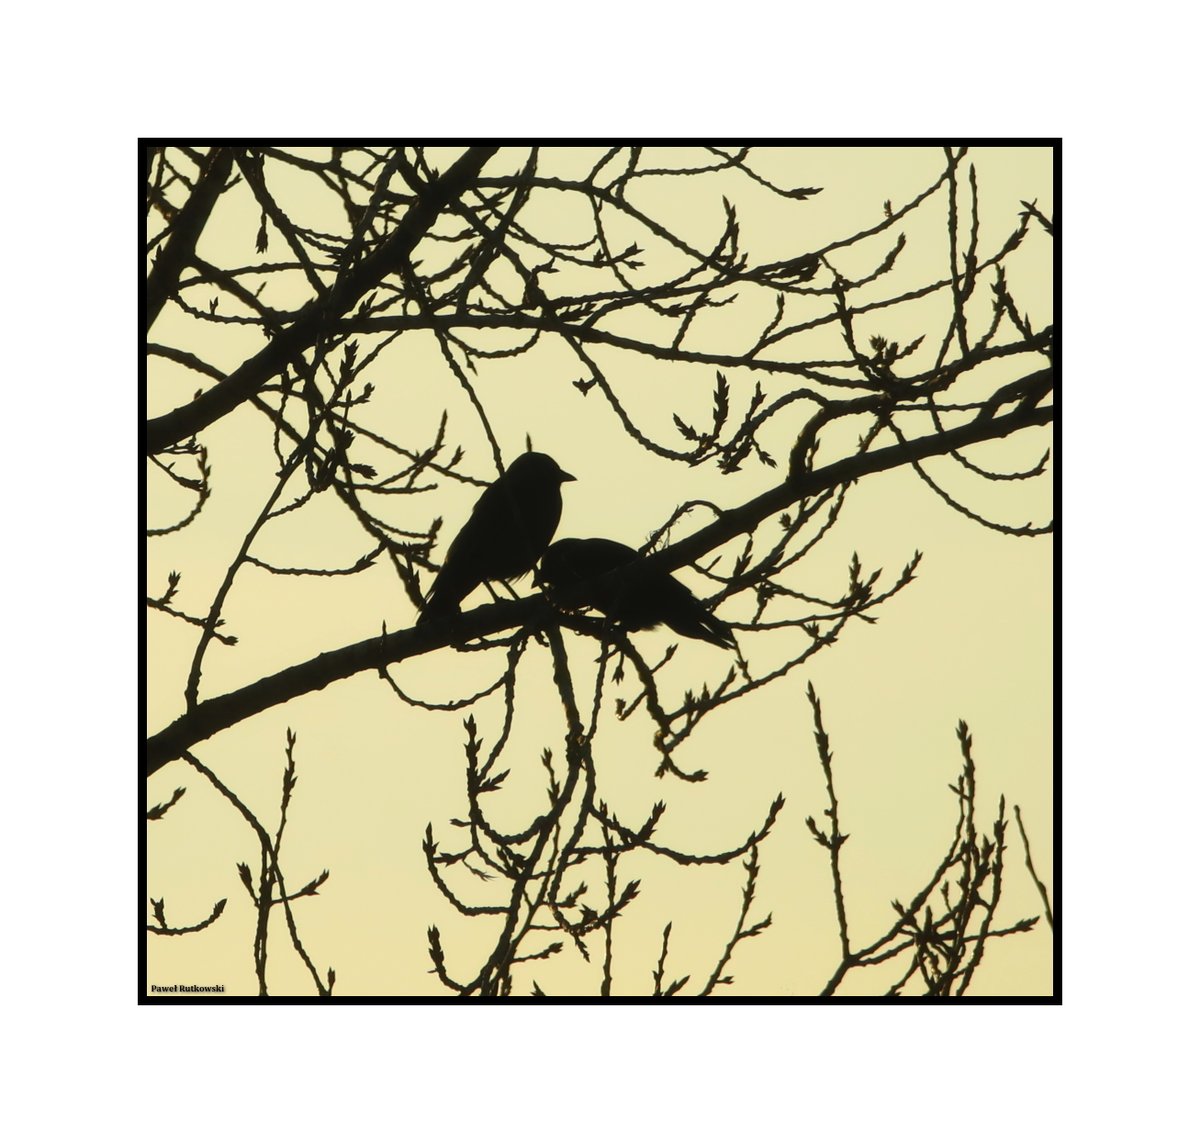 Wiosenny teatrzyk cieni / Spring-time shadow theatre

#NatureforSunday #BehindtheWindow #jackdaws #birds #naturephotography #birdphotography #ThePhotoHour